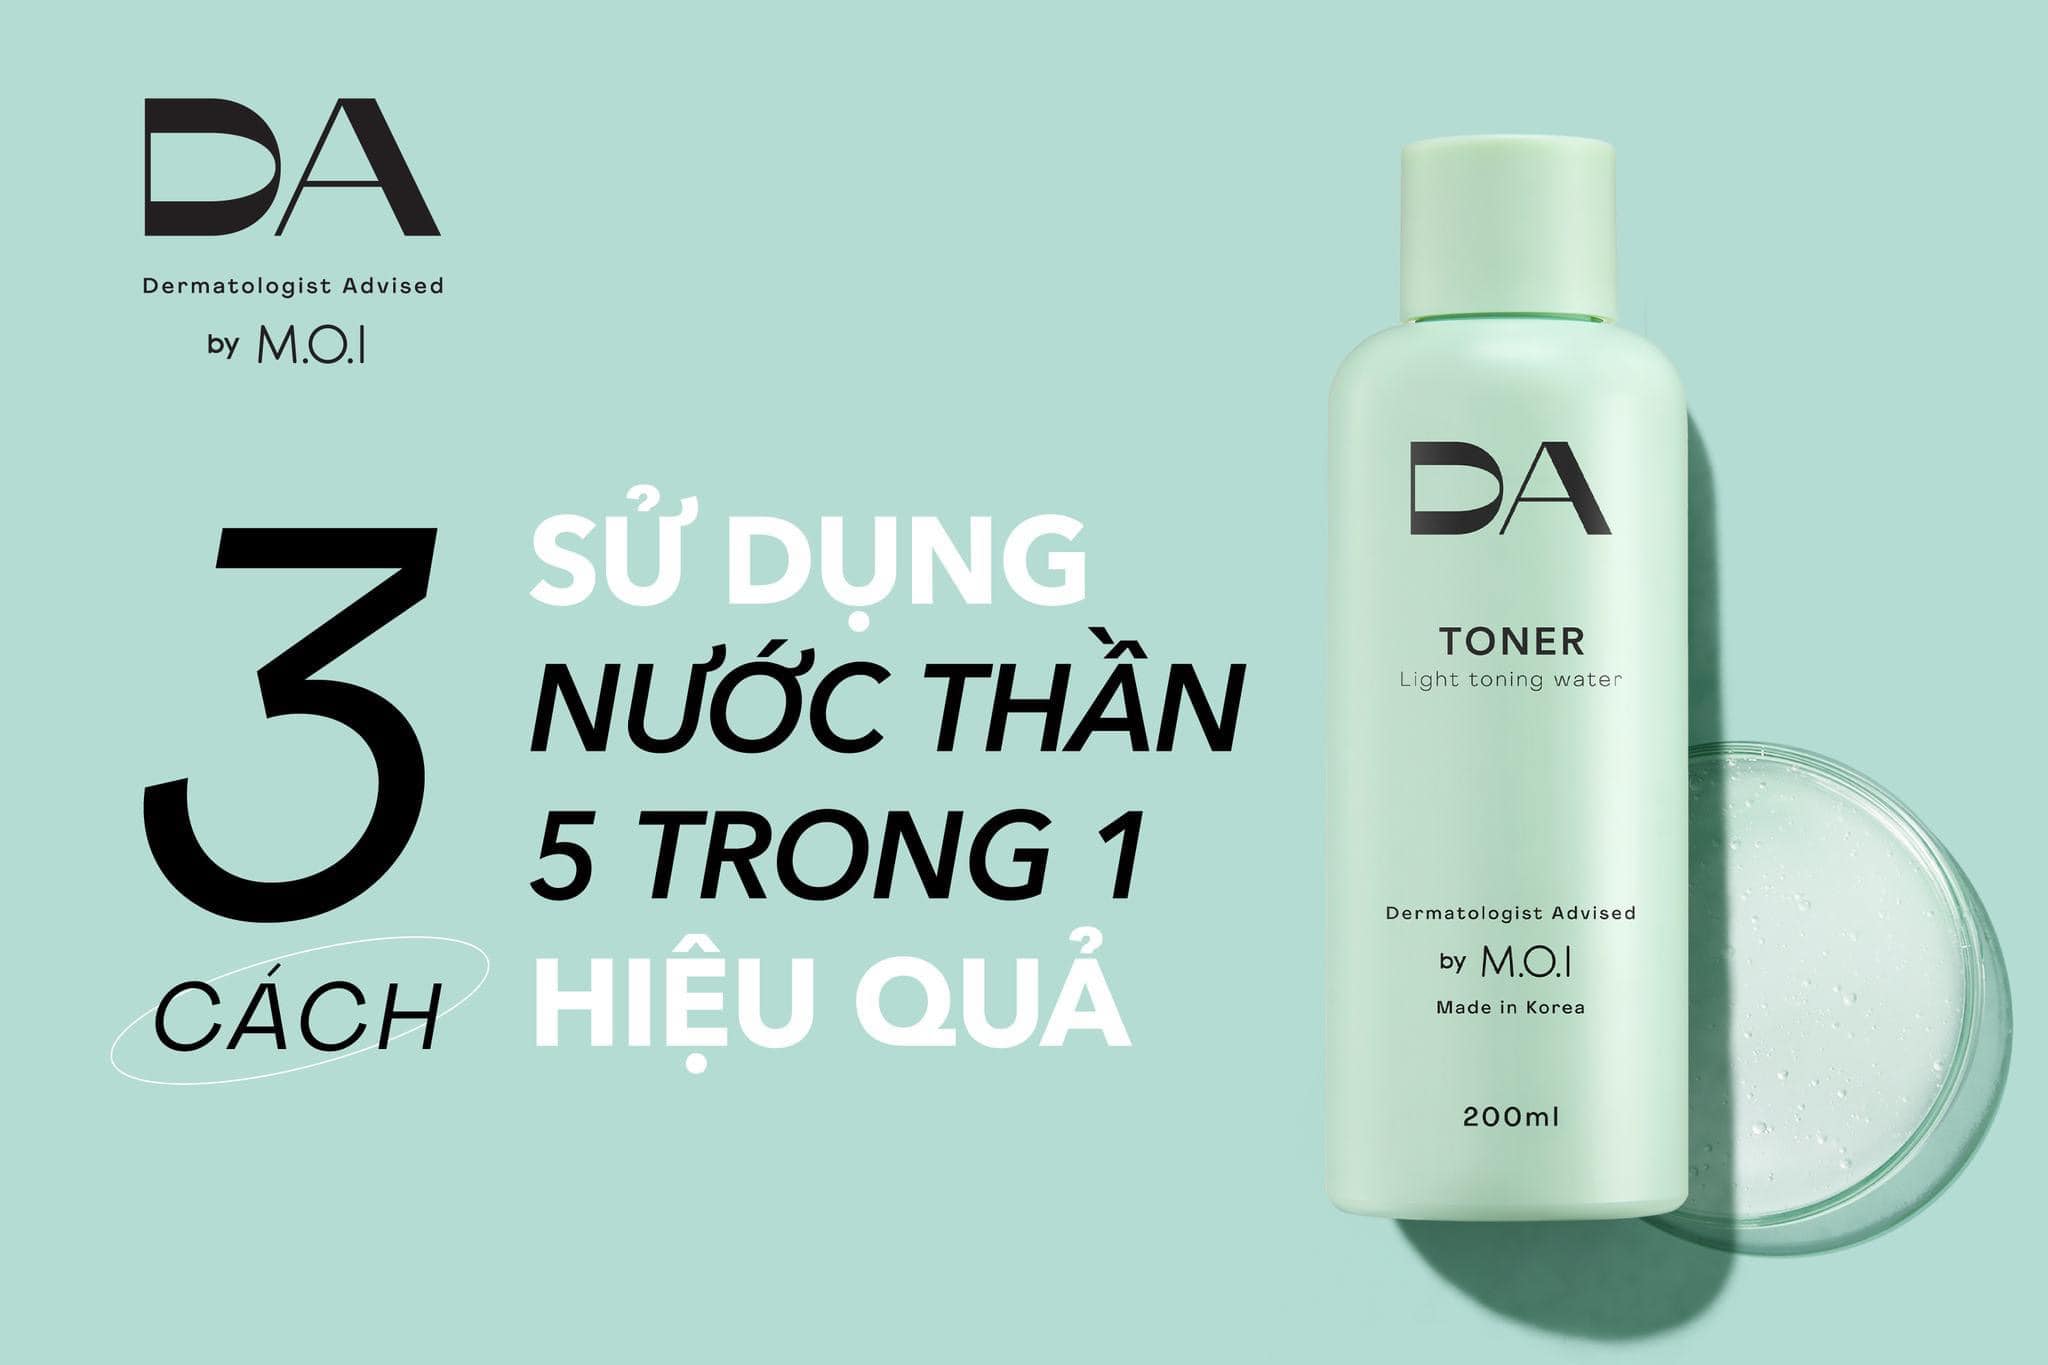 Toner DA by MOI Cosmetics